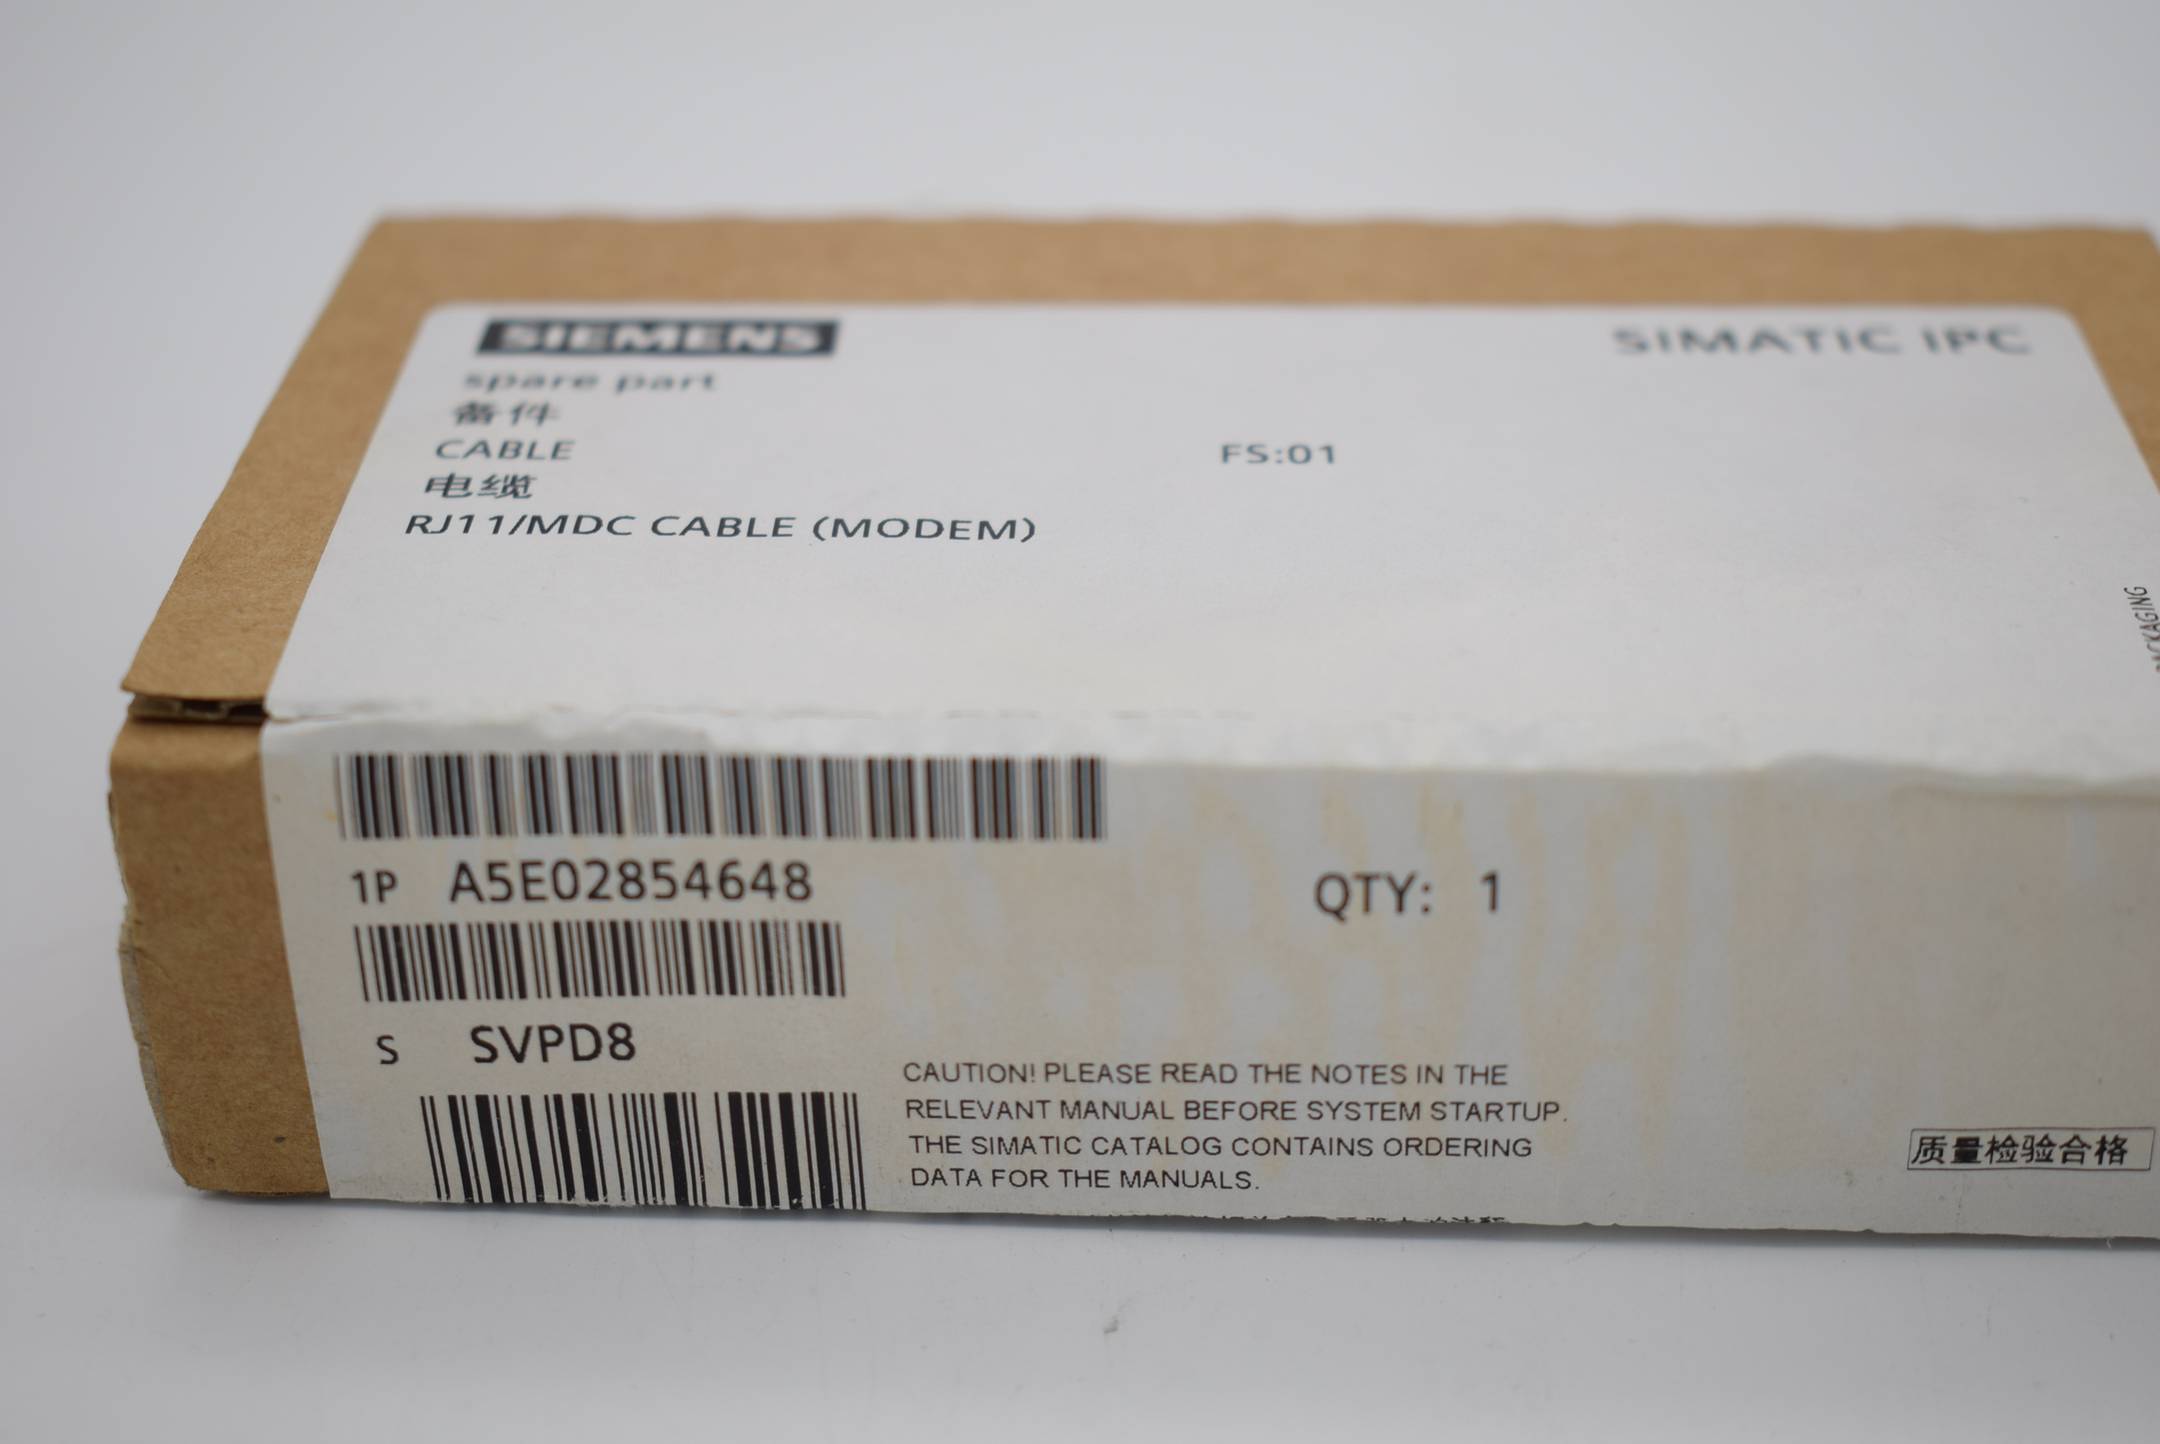 Siemens simatic ipc rj11/mdc cable ( modem )  A5E02854648 E1